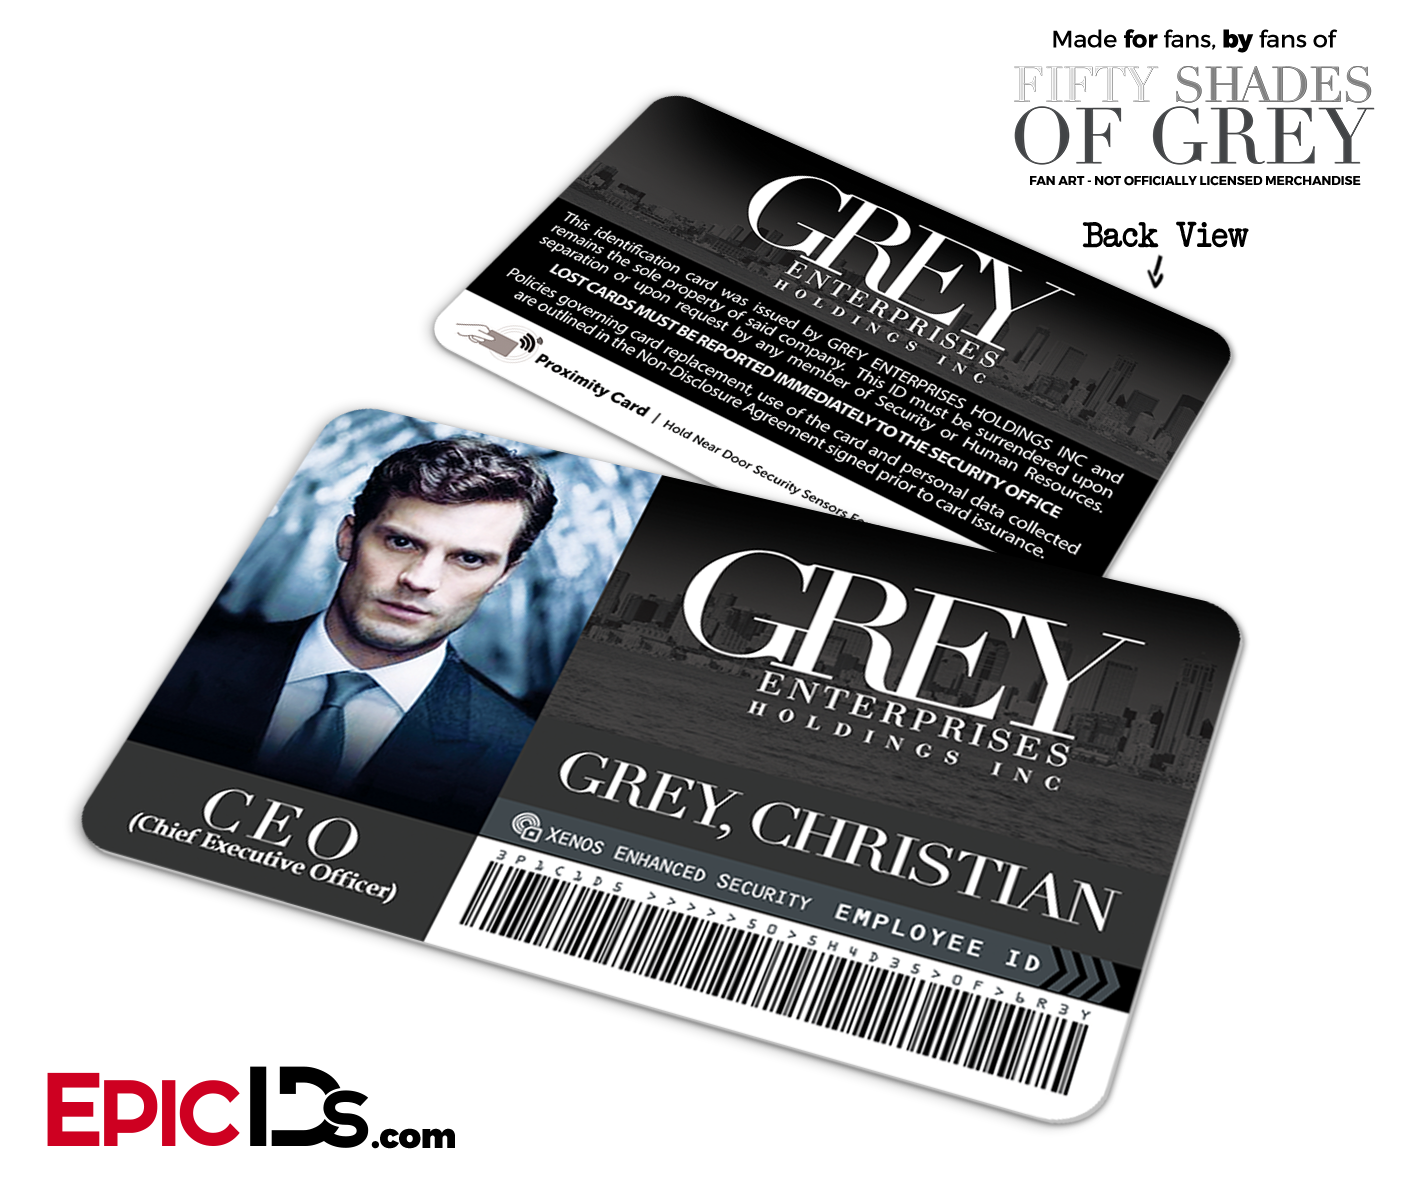 Grey Enterprises 'Fifty Shades Of Grey' Cosplay Employee ID Card - Christian Grey